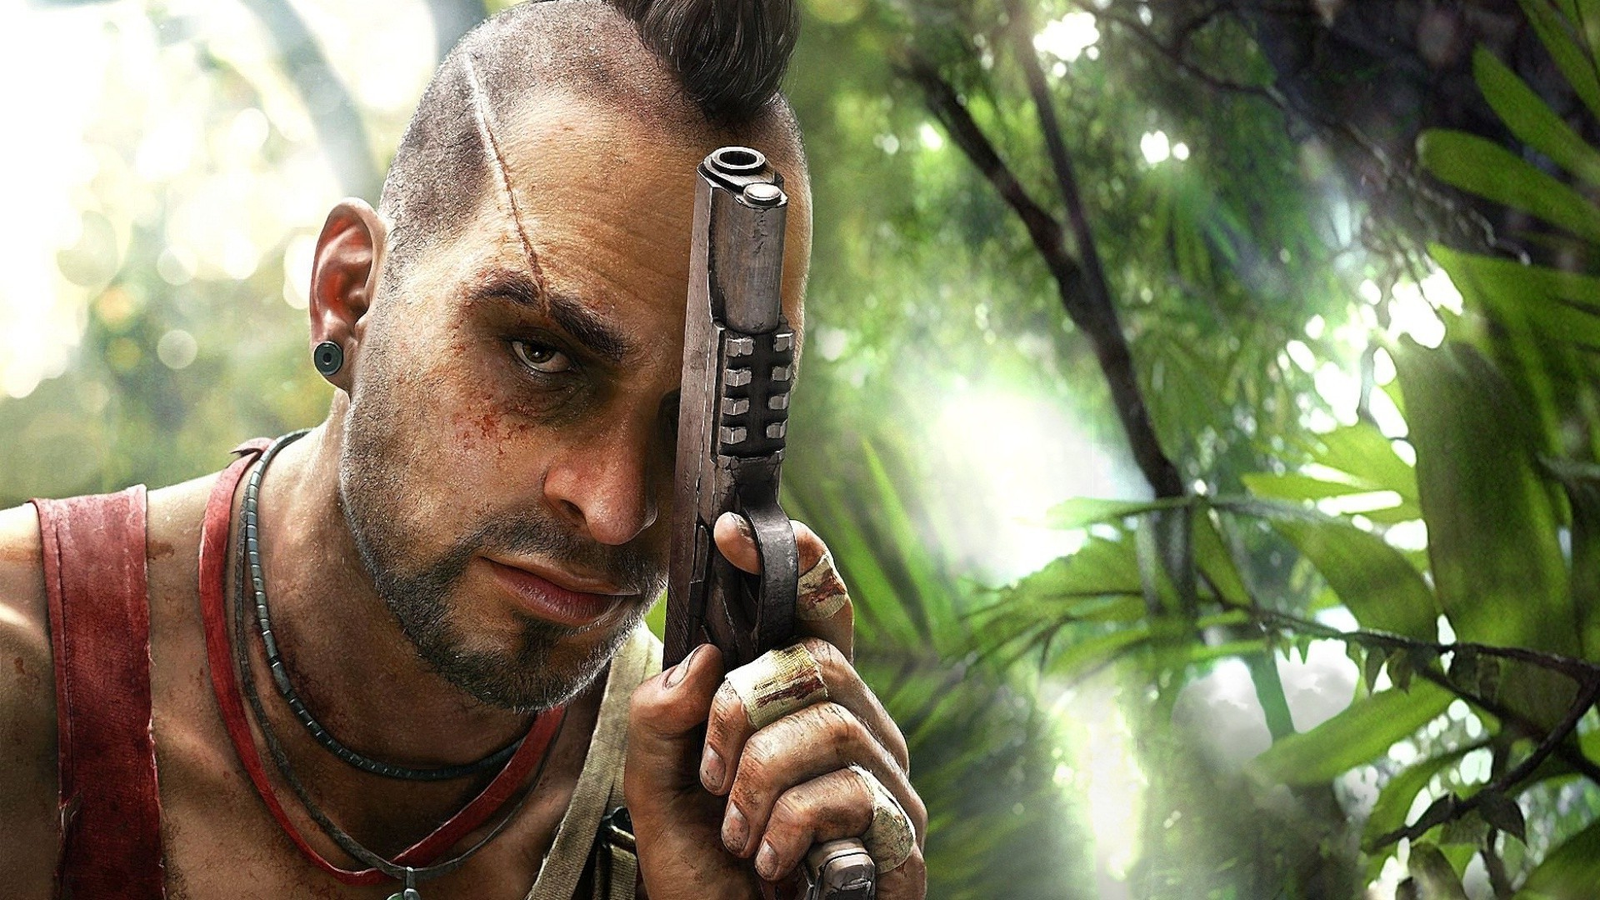 Far Cry 2 - Launch Trailer 